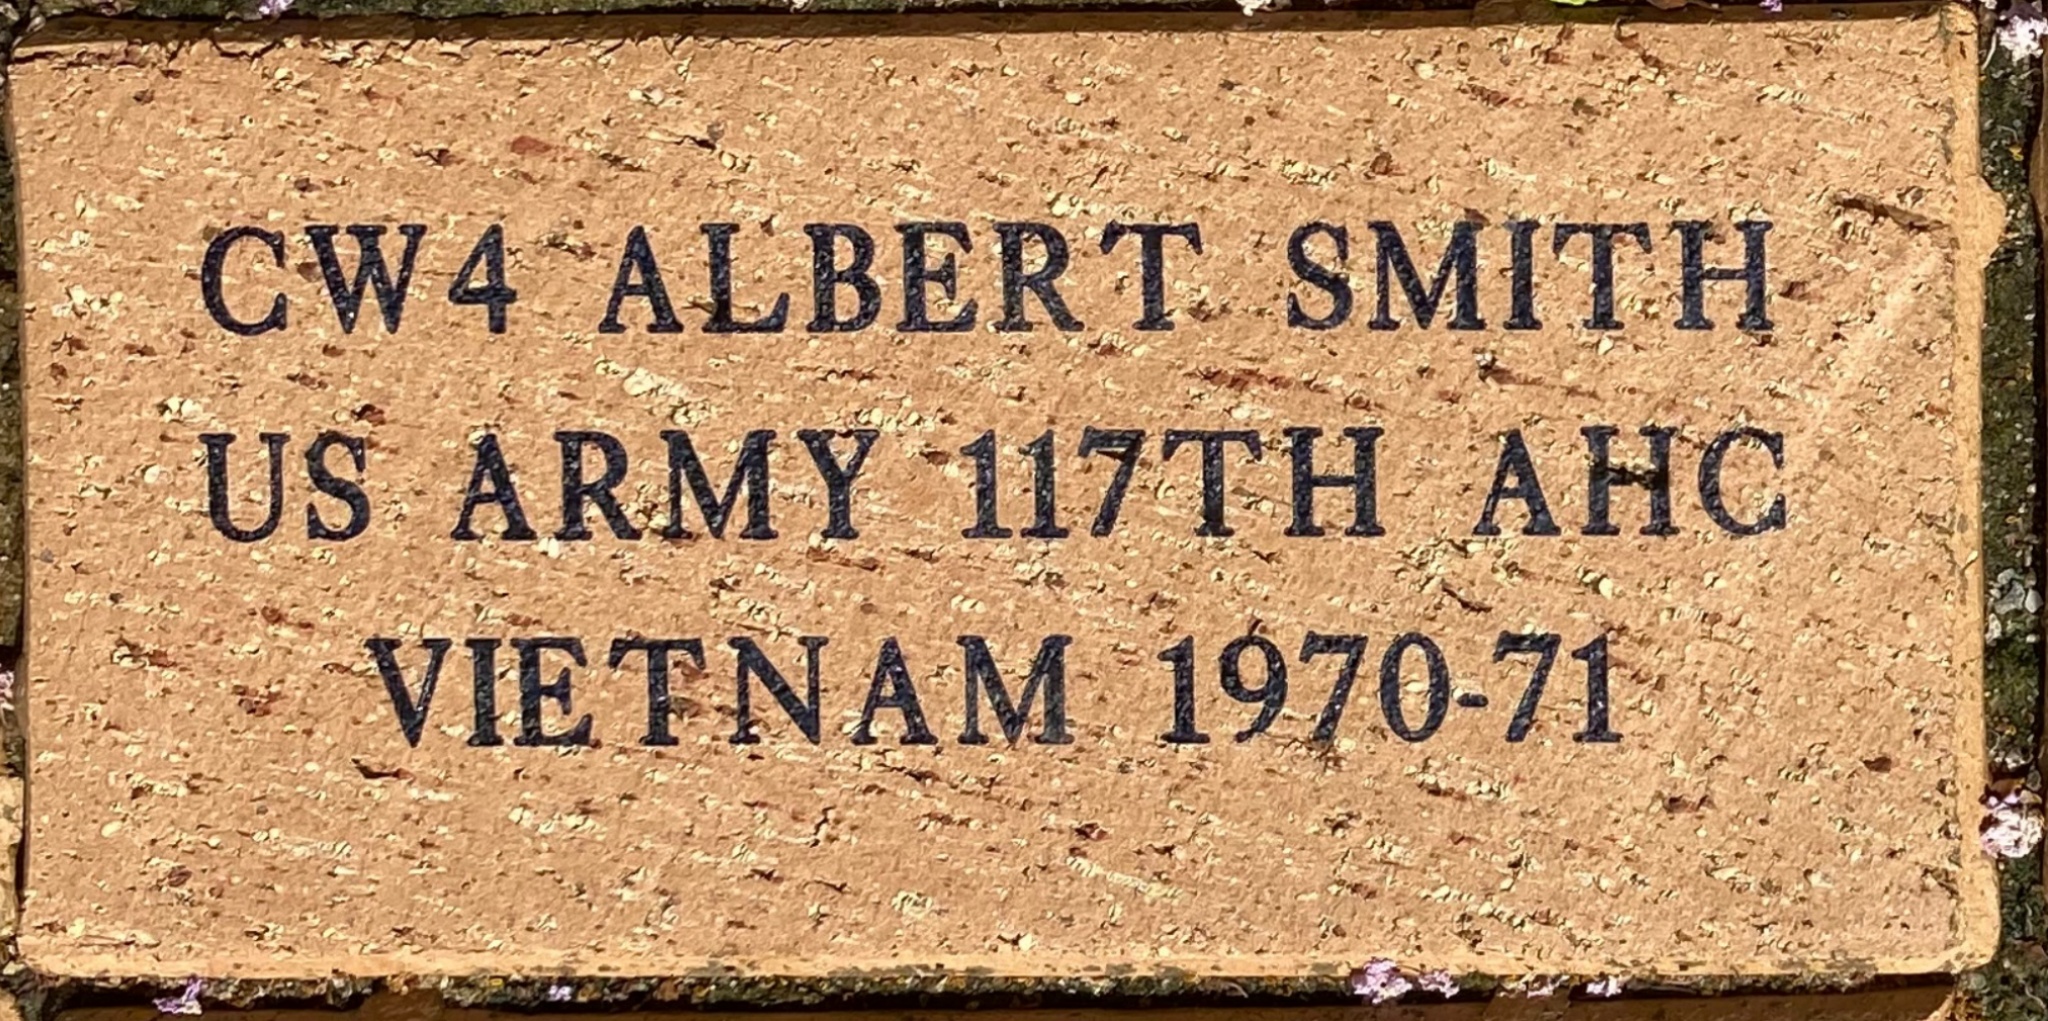 CW4 ALBERT SMITH US ARMY 117TH AHC VIETNAM 1970-71